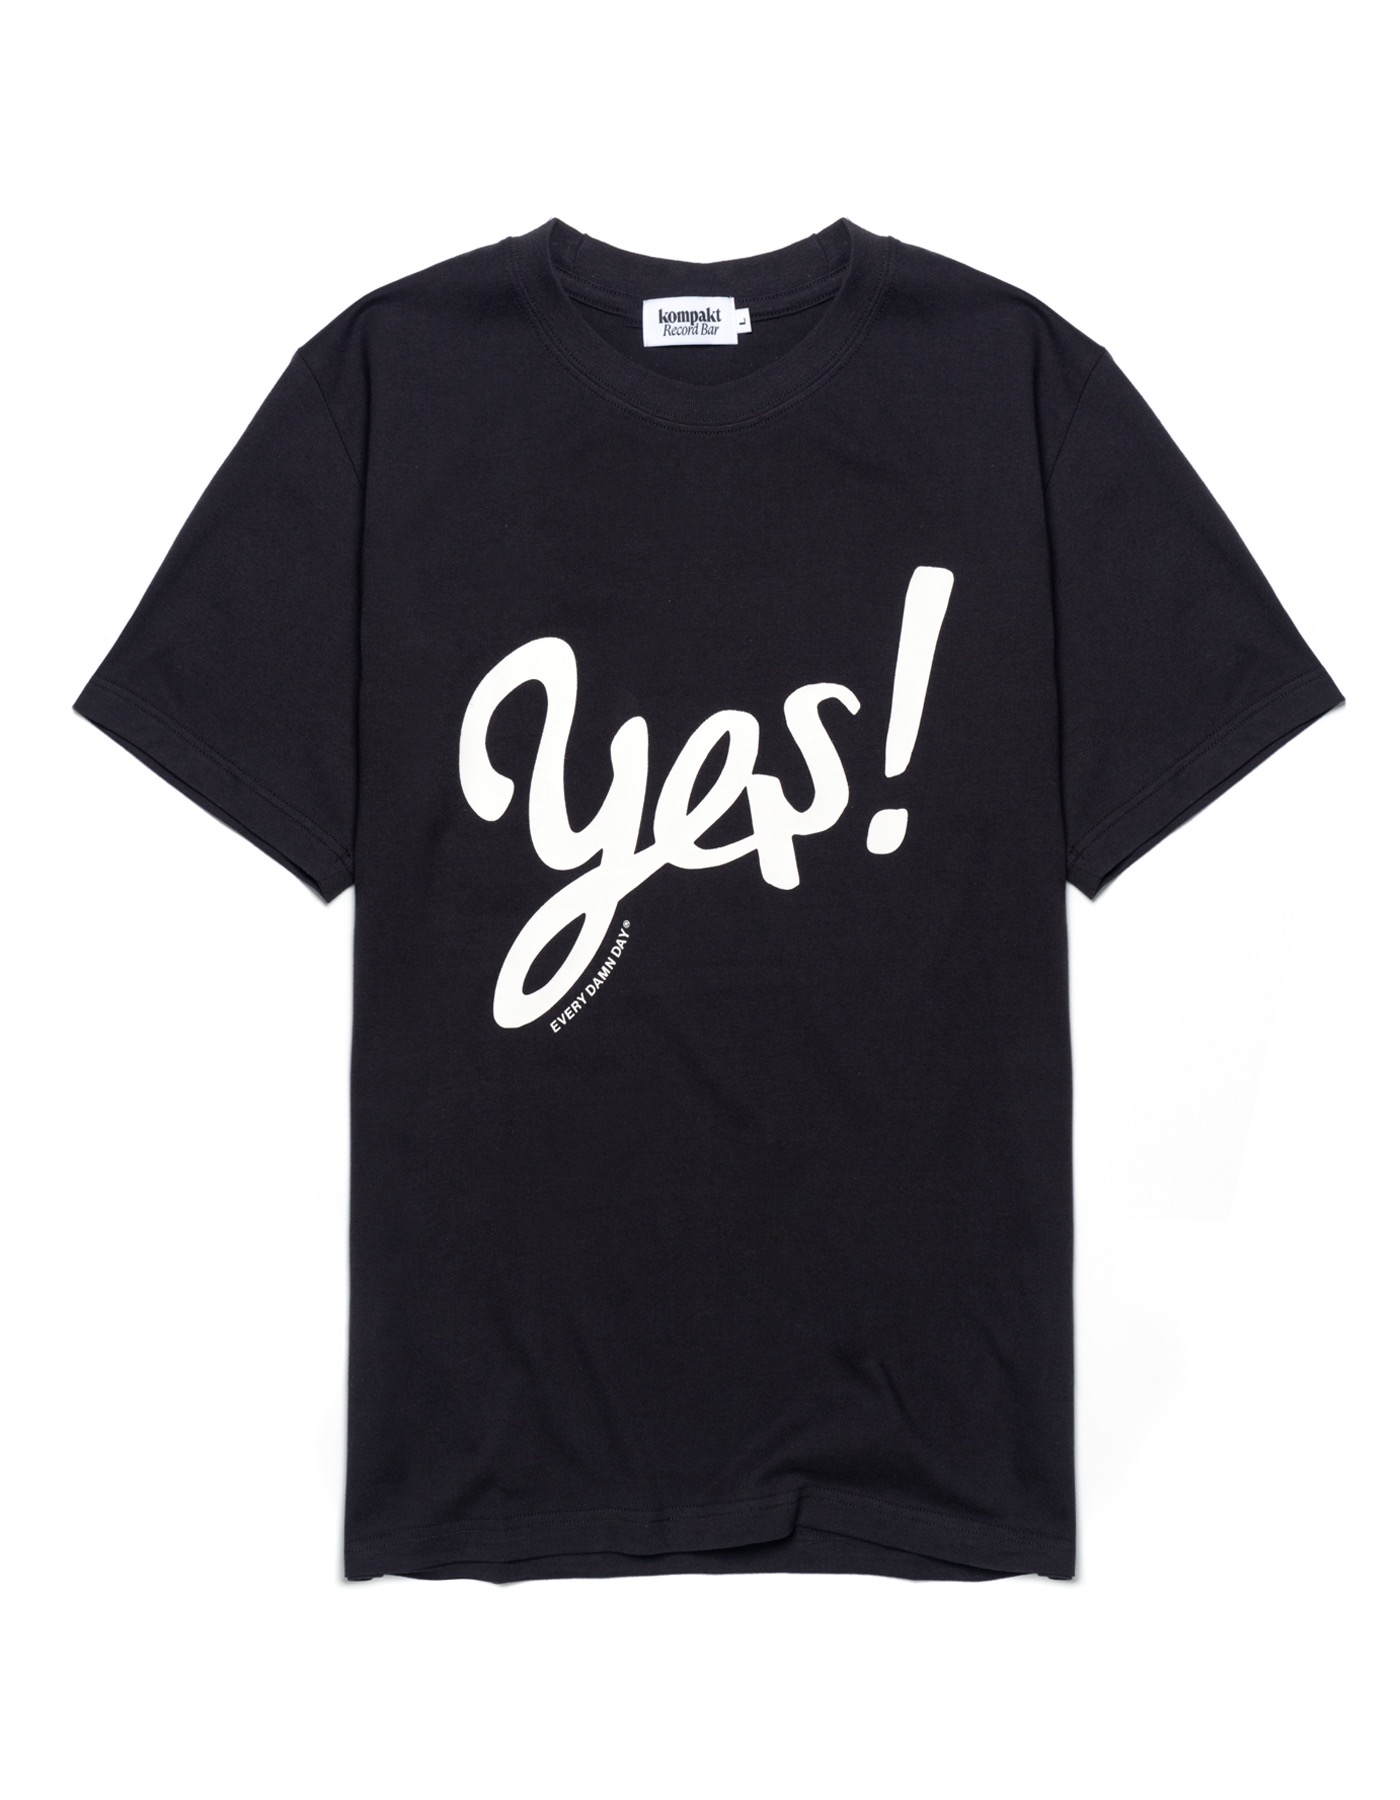 Yes! T-shirts - Black